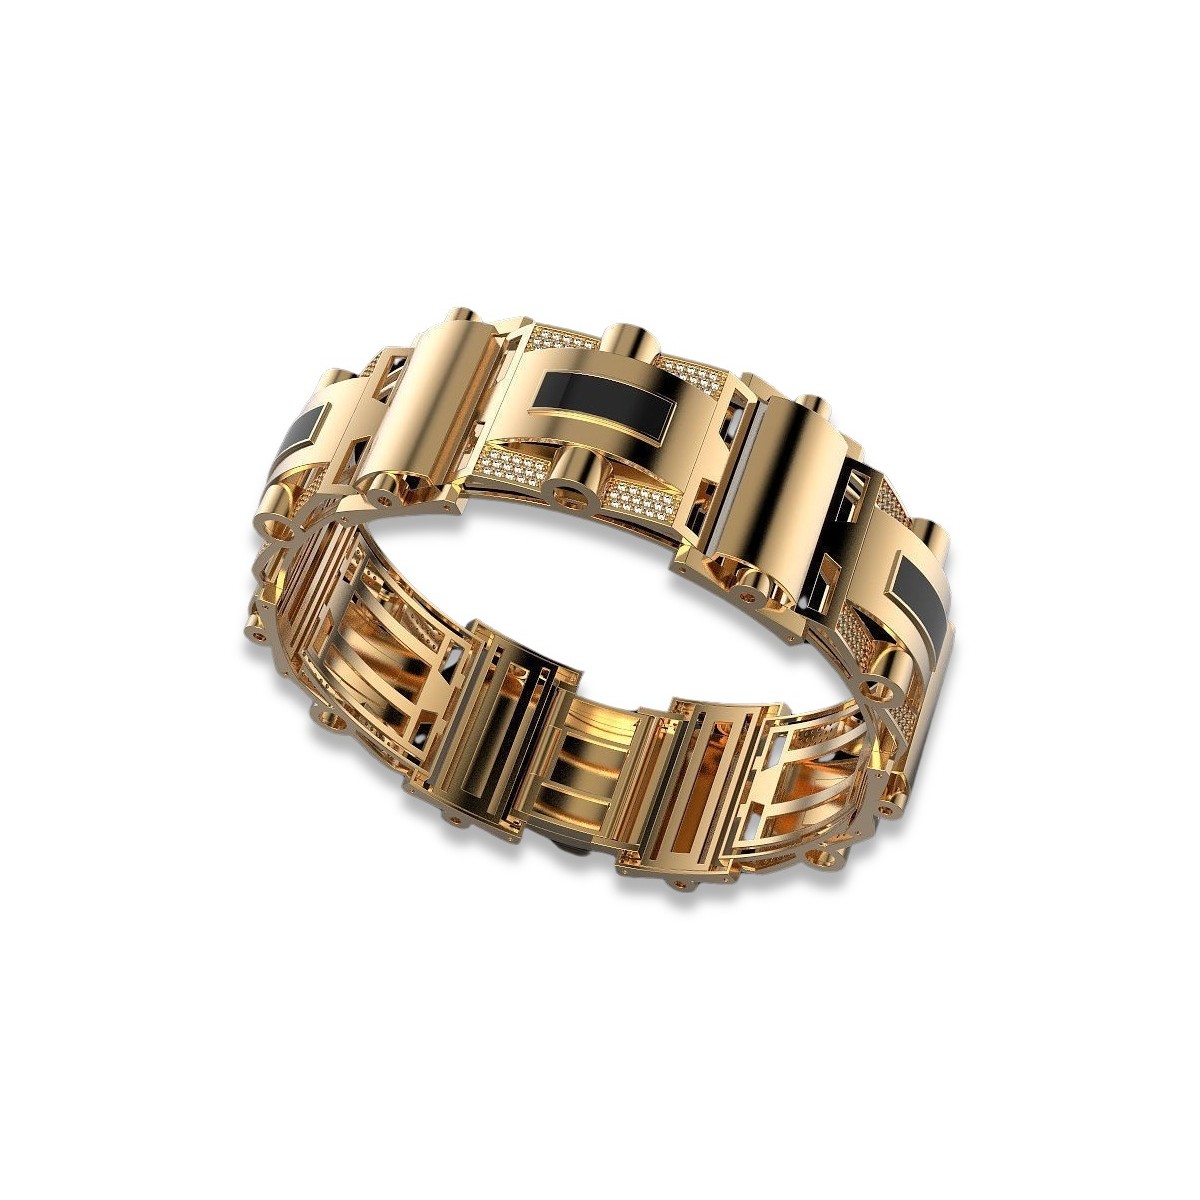 Bracelet and ring set in 18k Italian gold, free of stones and stones -  مجوهرات اليافعي جمان